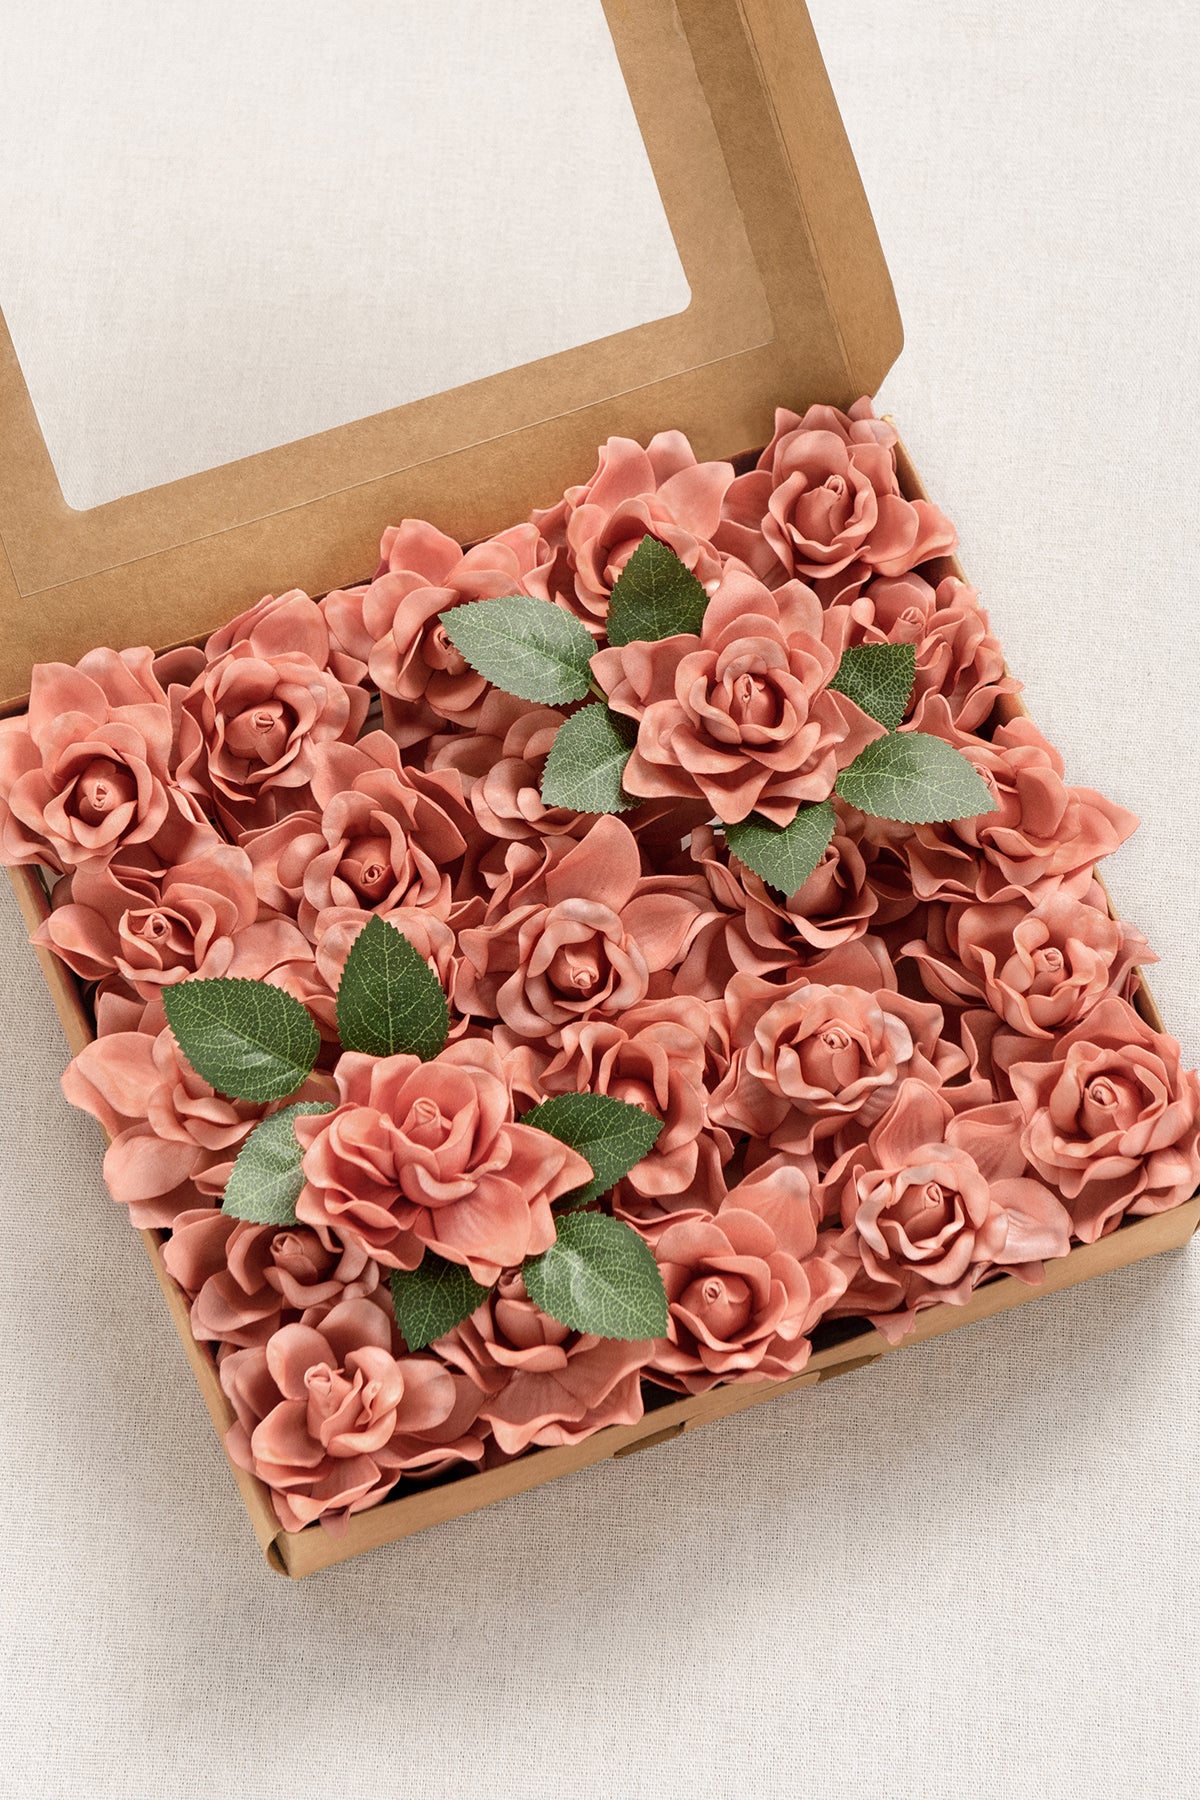 DIY Supporting Flower Boxes in Garden Blush